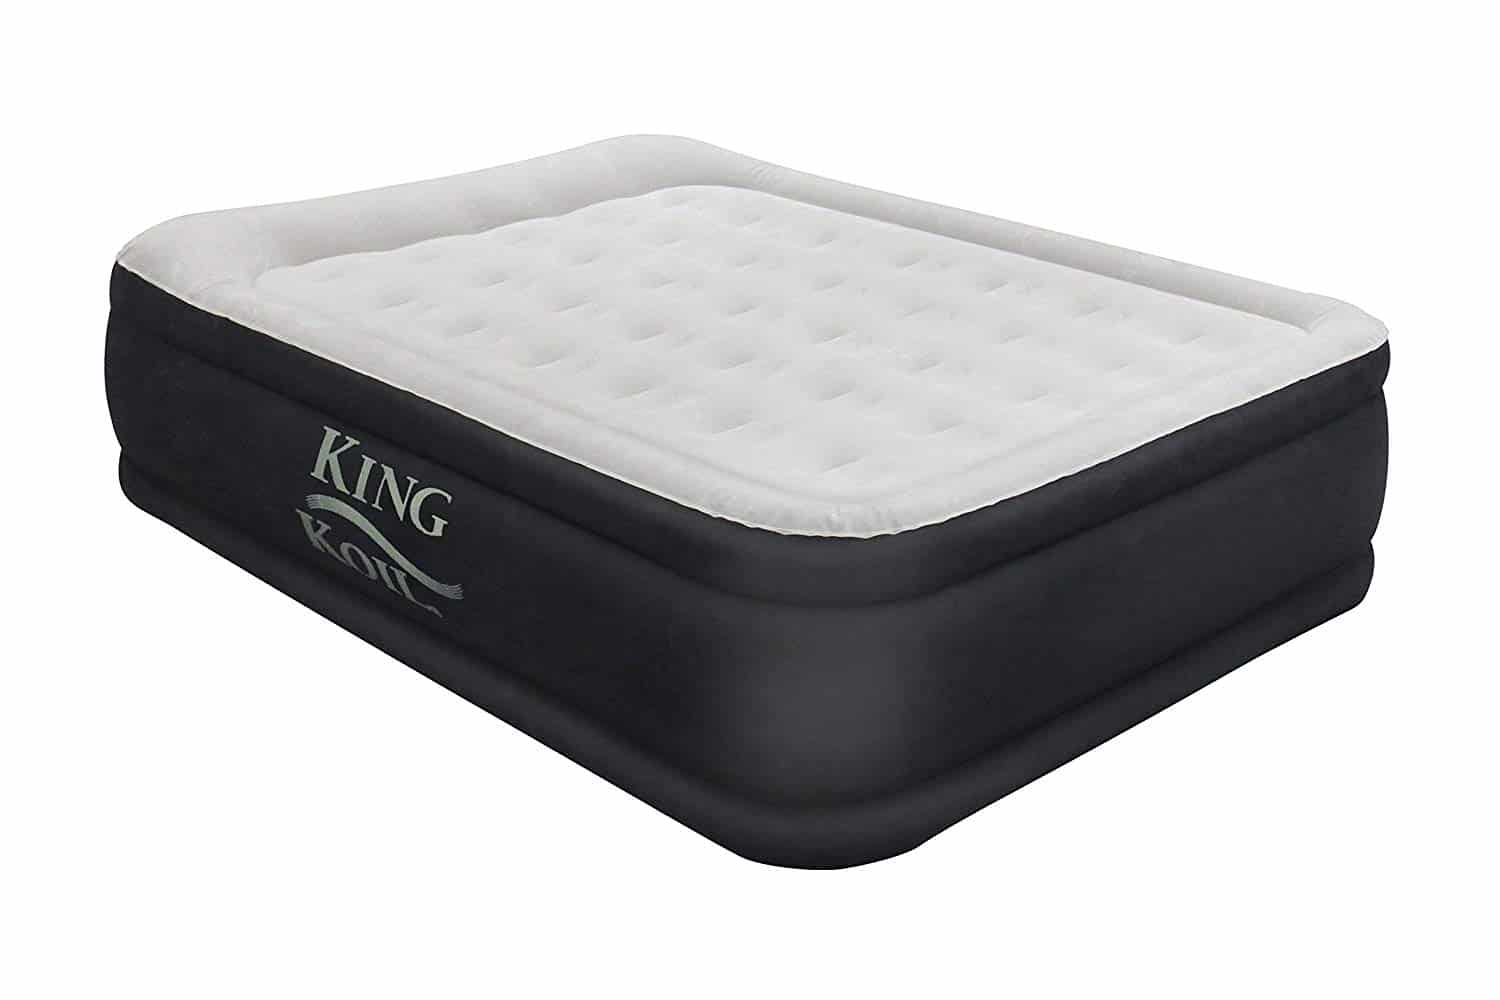 hiw to shop vac air mattress